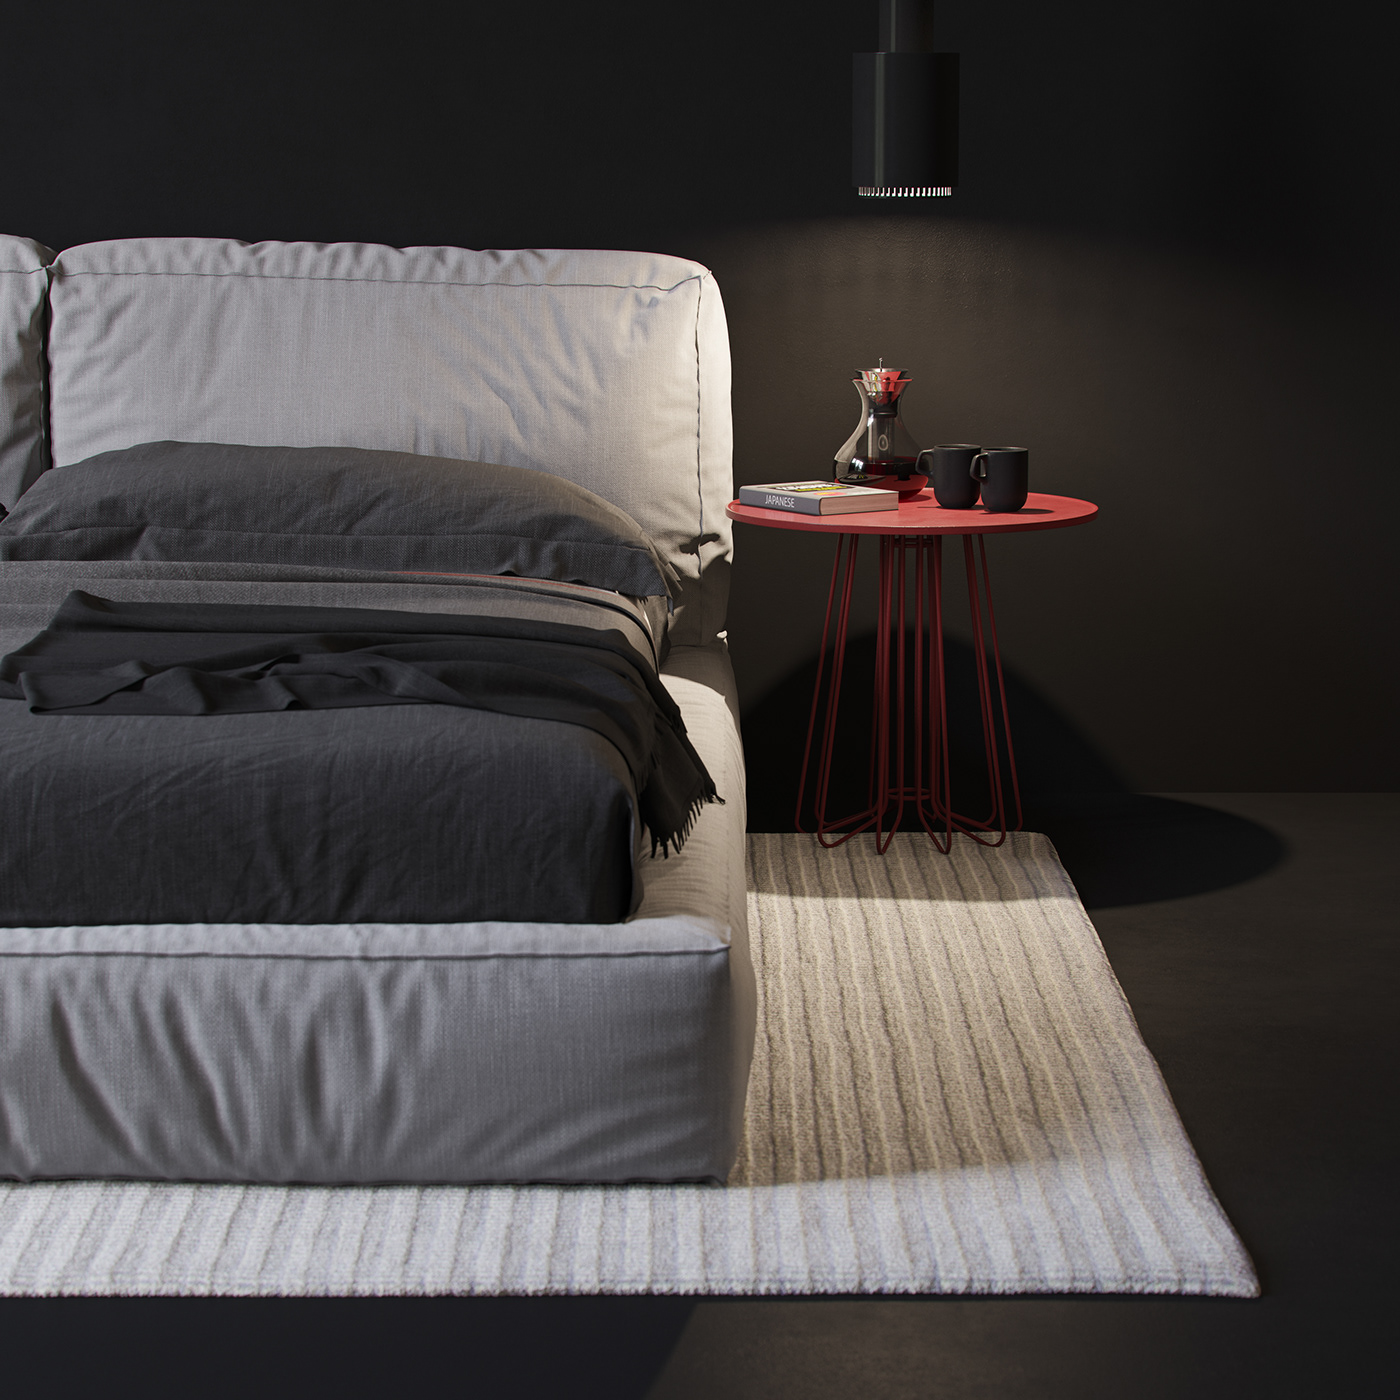 Twils zanotta piuma Artek bed bedroom design Interior furniture lighting